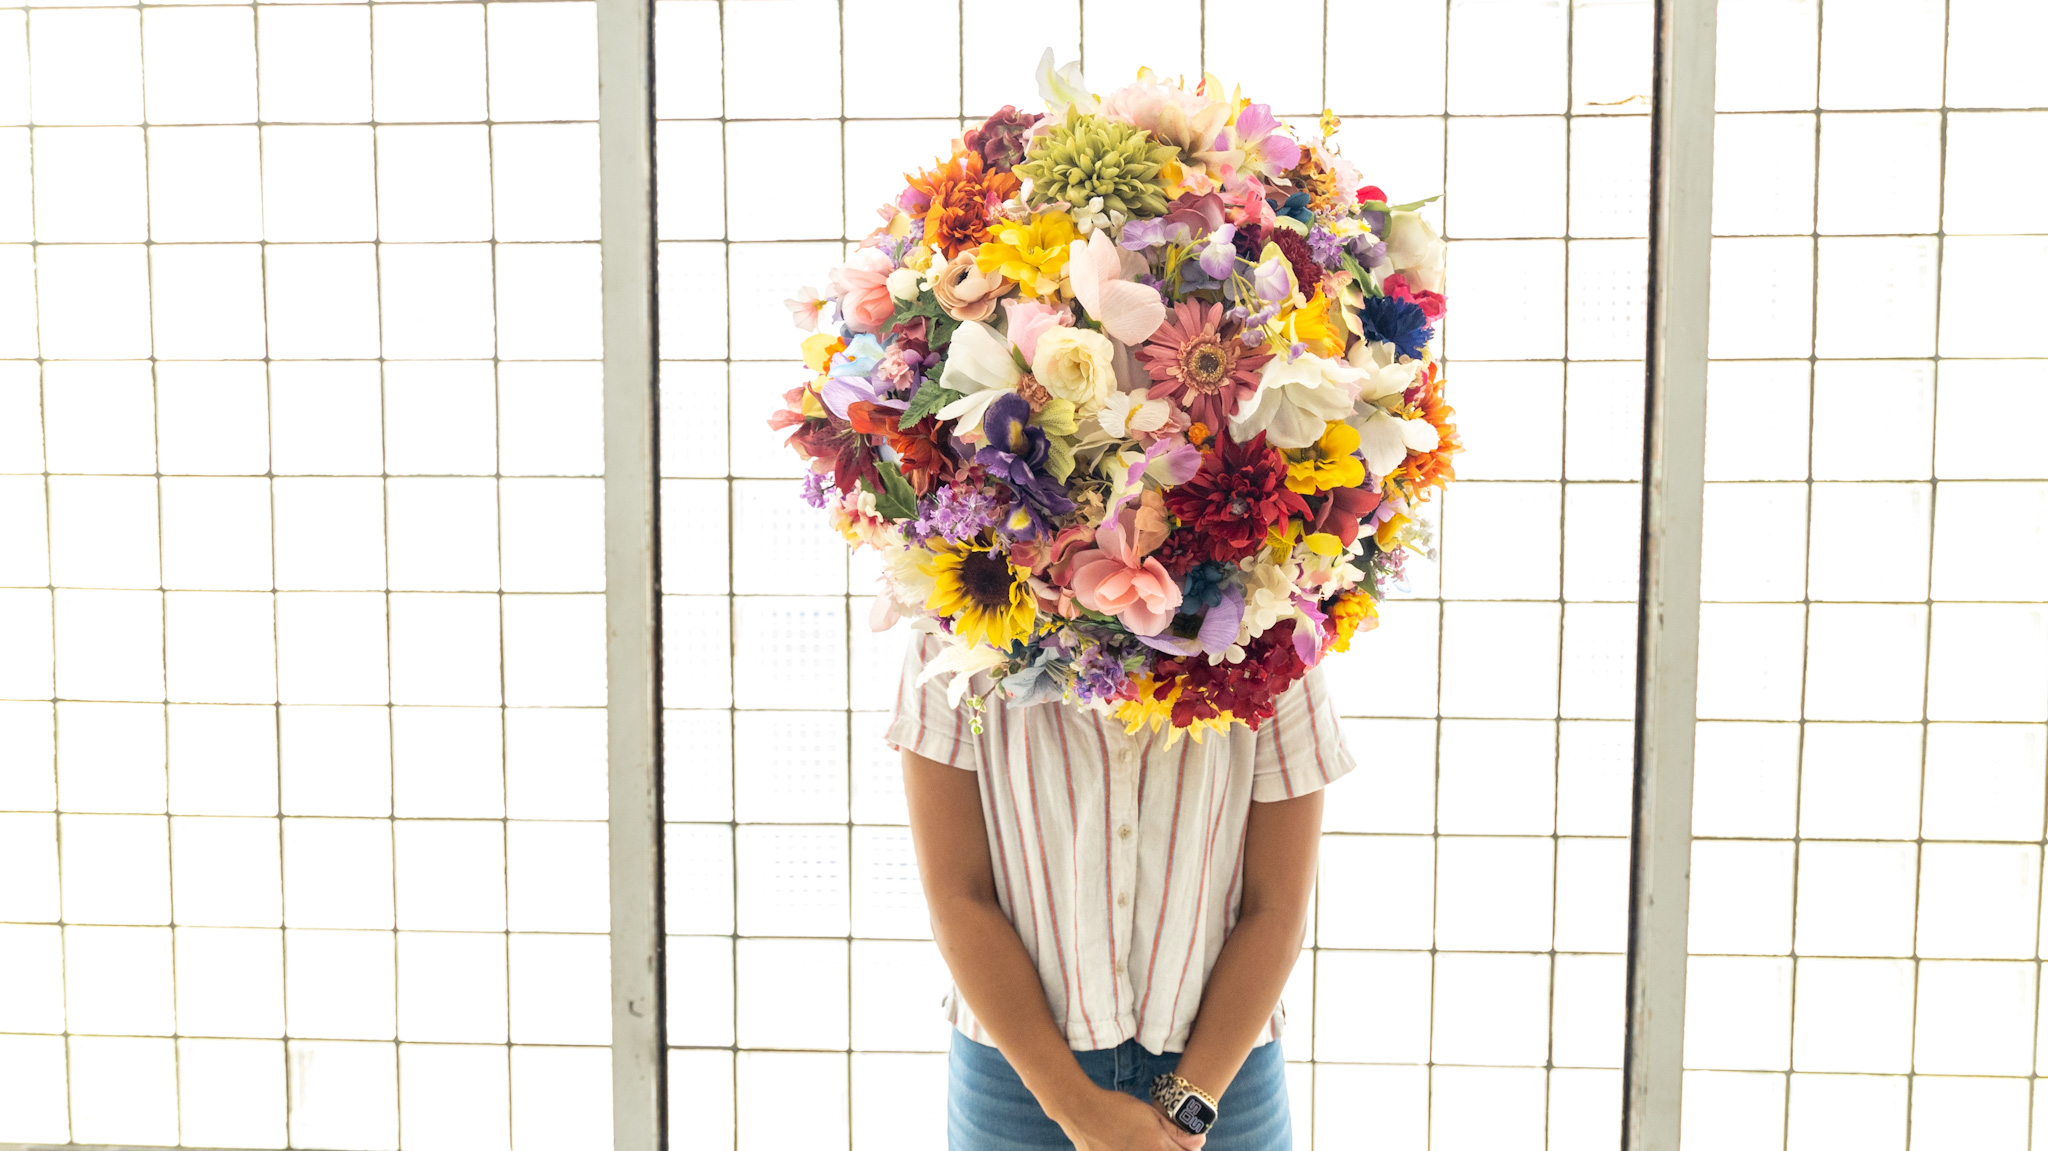 WDET photojournalist intern Tayler Simpson wears a flower headdress created by artist Lisa Waud.